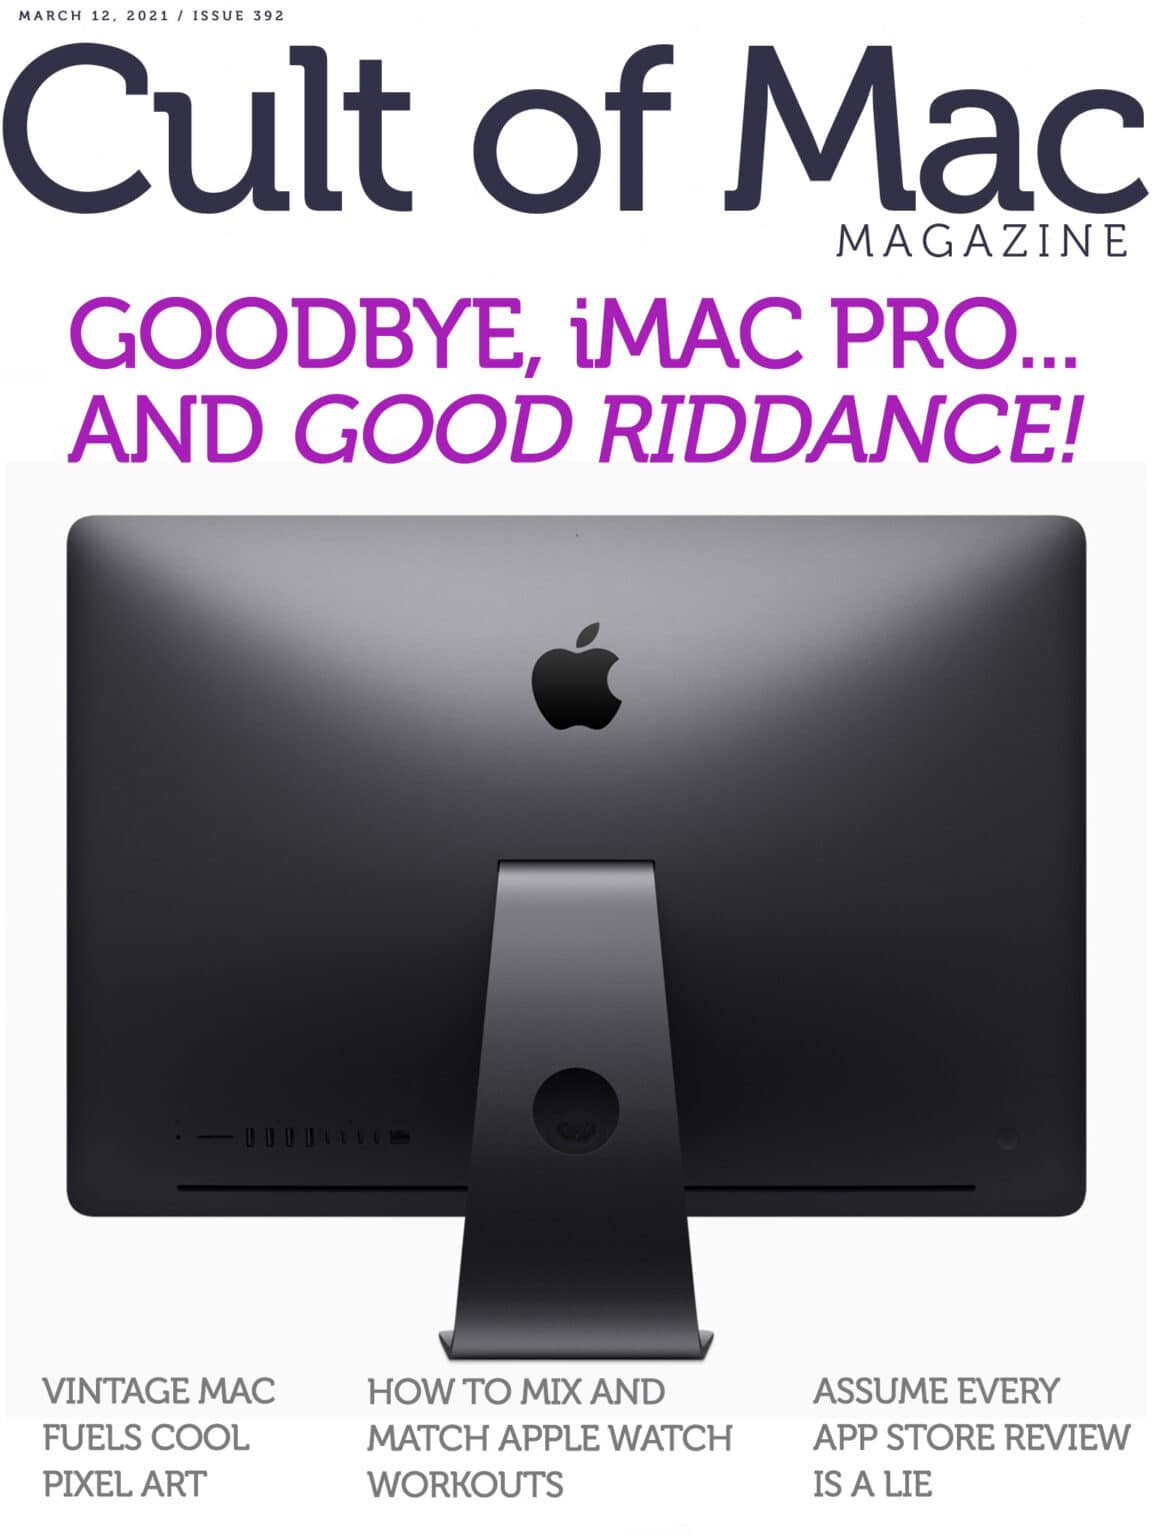 Goodbye, iMac Pro ... and good riddance.